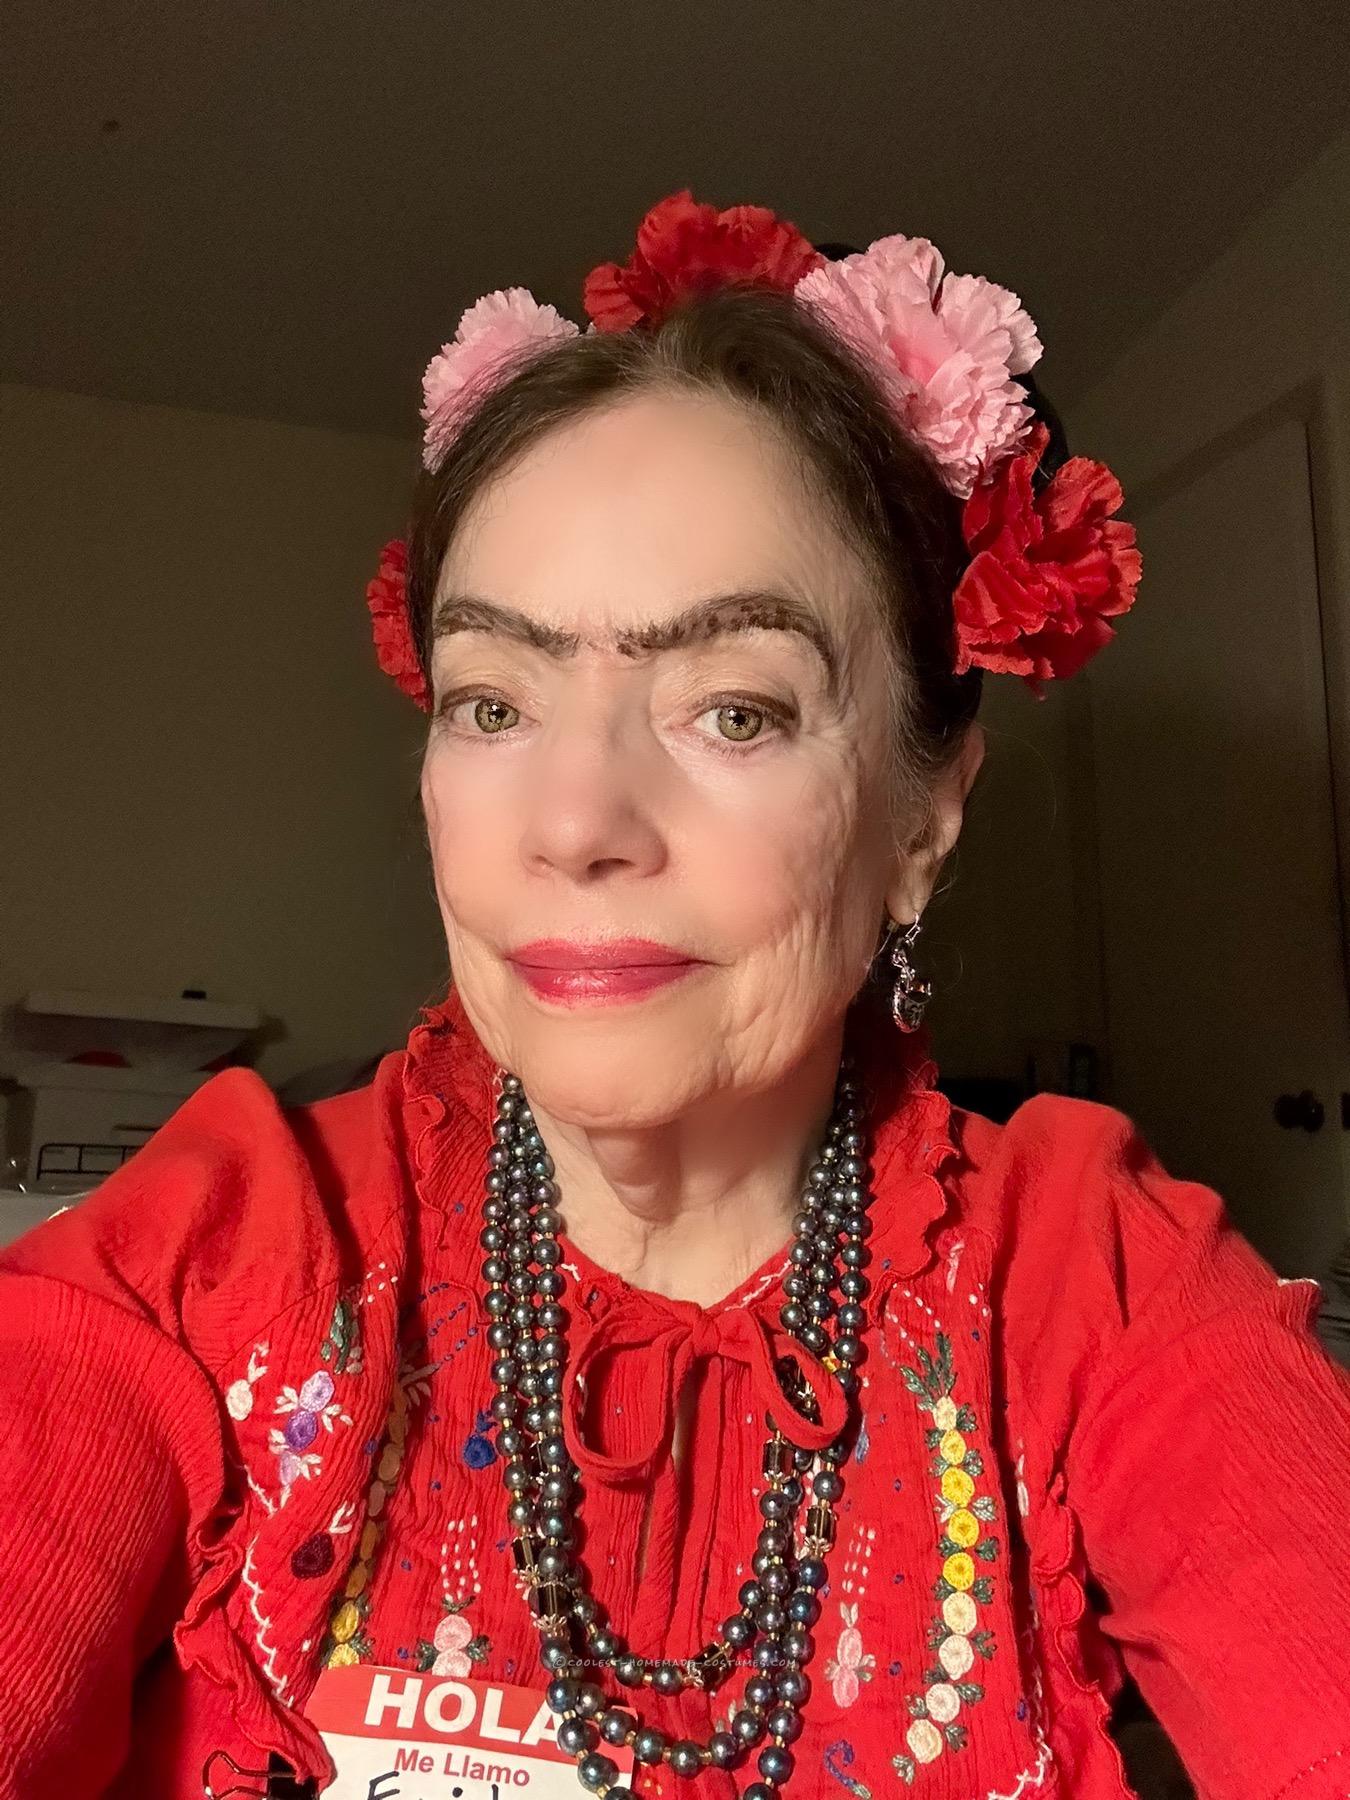 Almost FREE DIY Frida Kahlo Women’s Costume